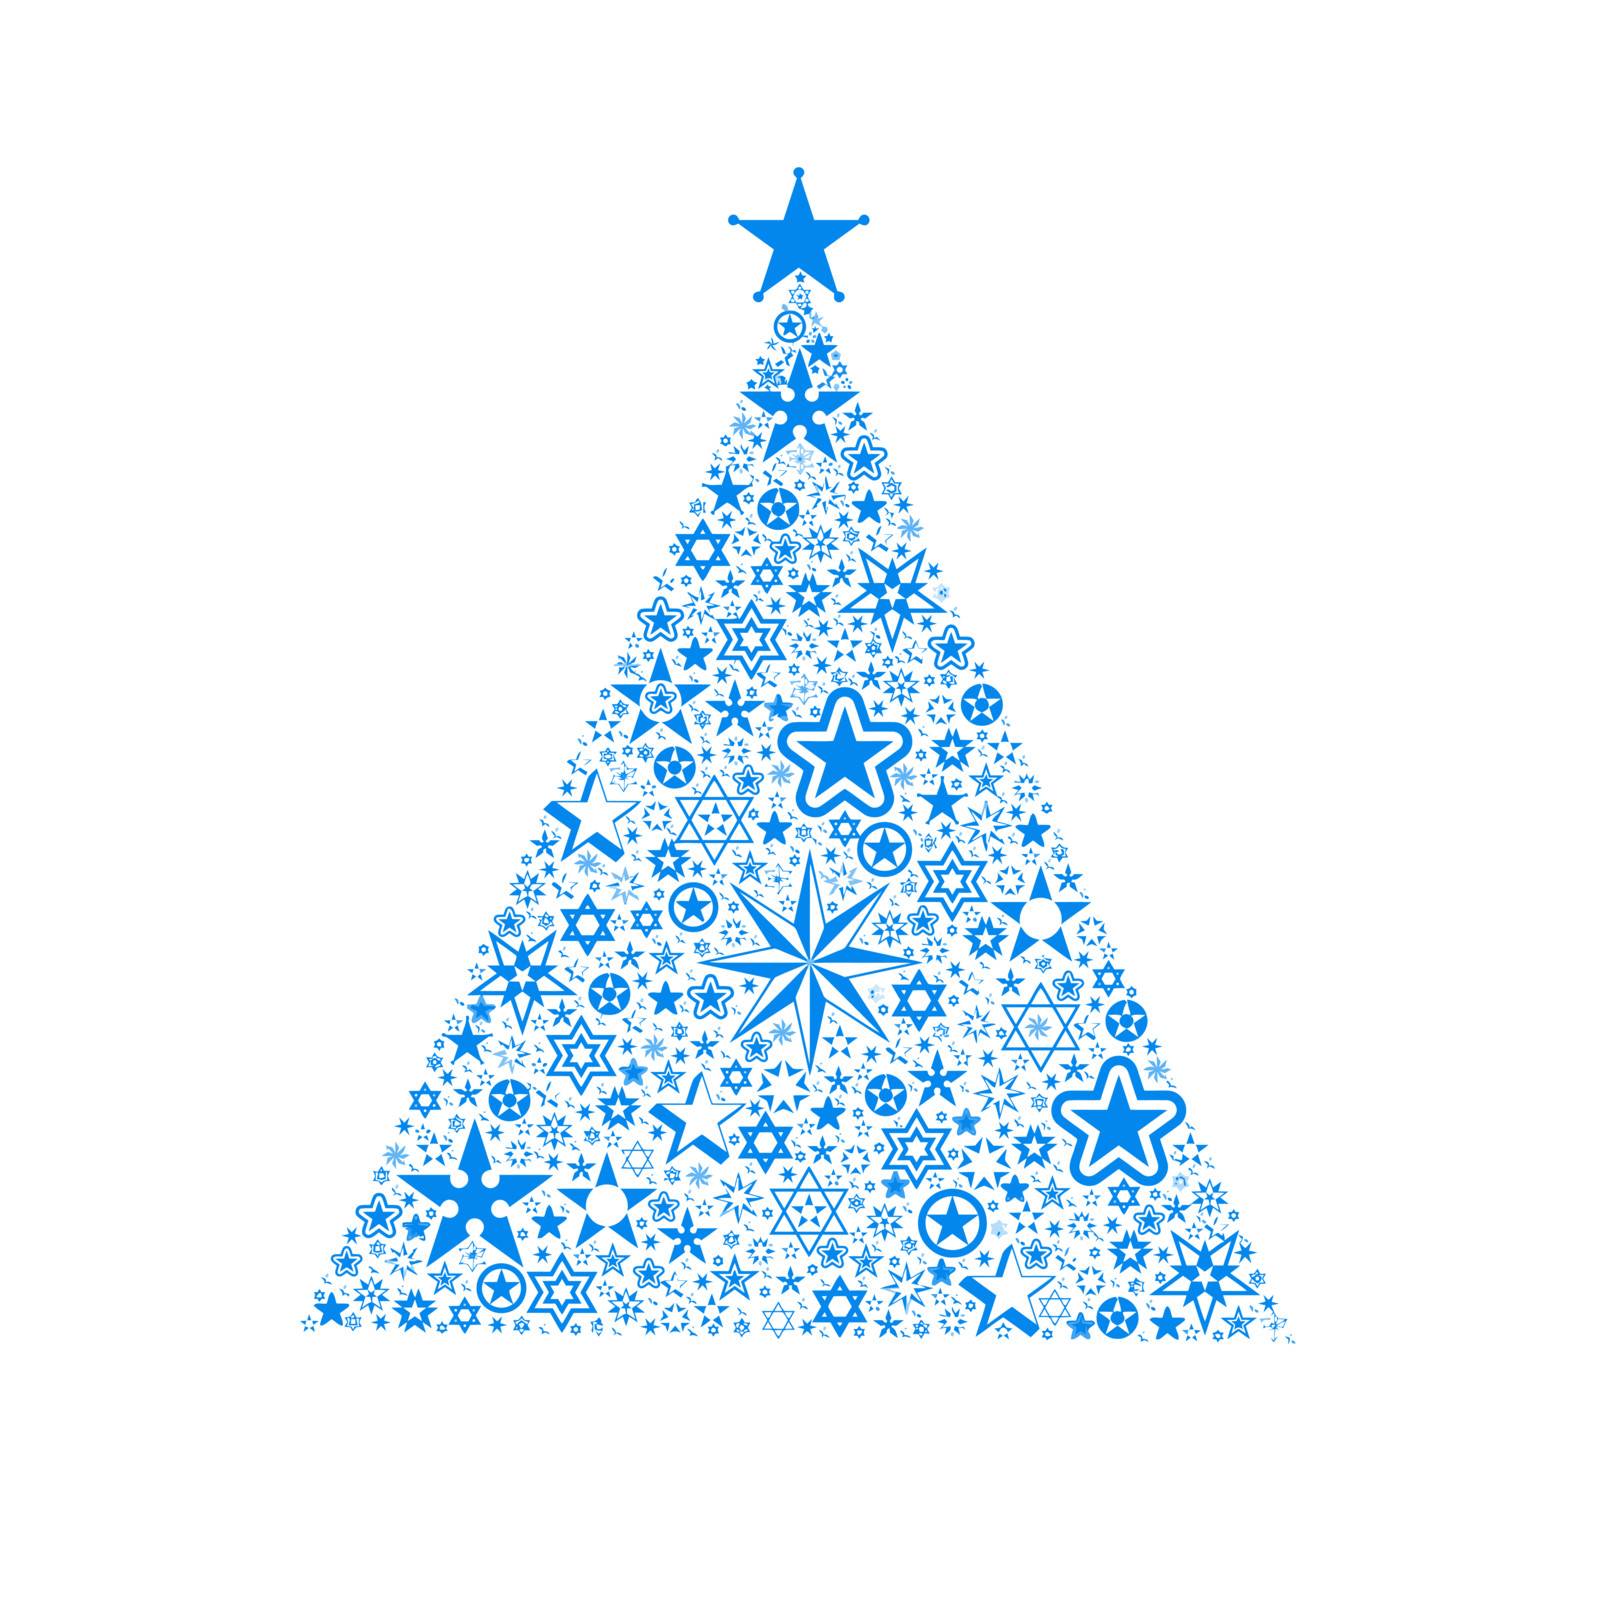 Beautiful christmas decoration of stars tree isolated on white